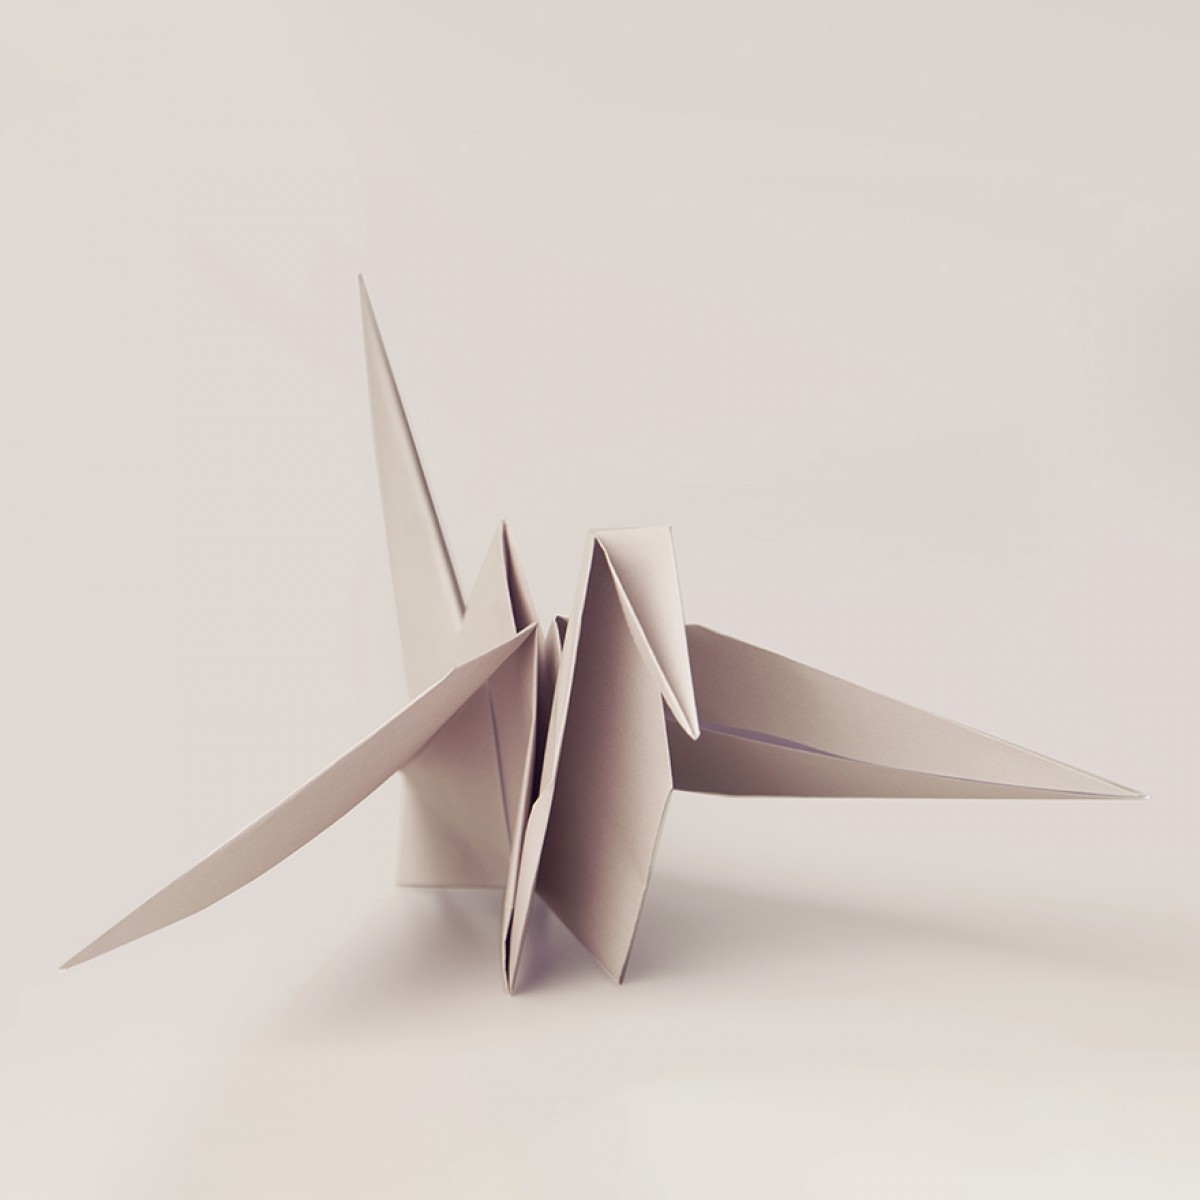 Origami Print Kranich von Christina Pauls